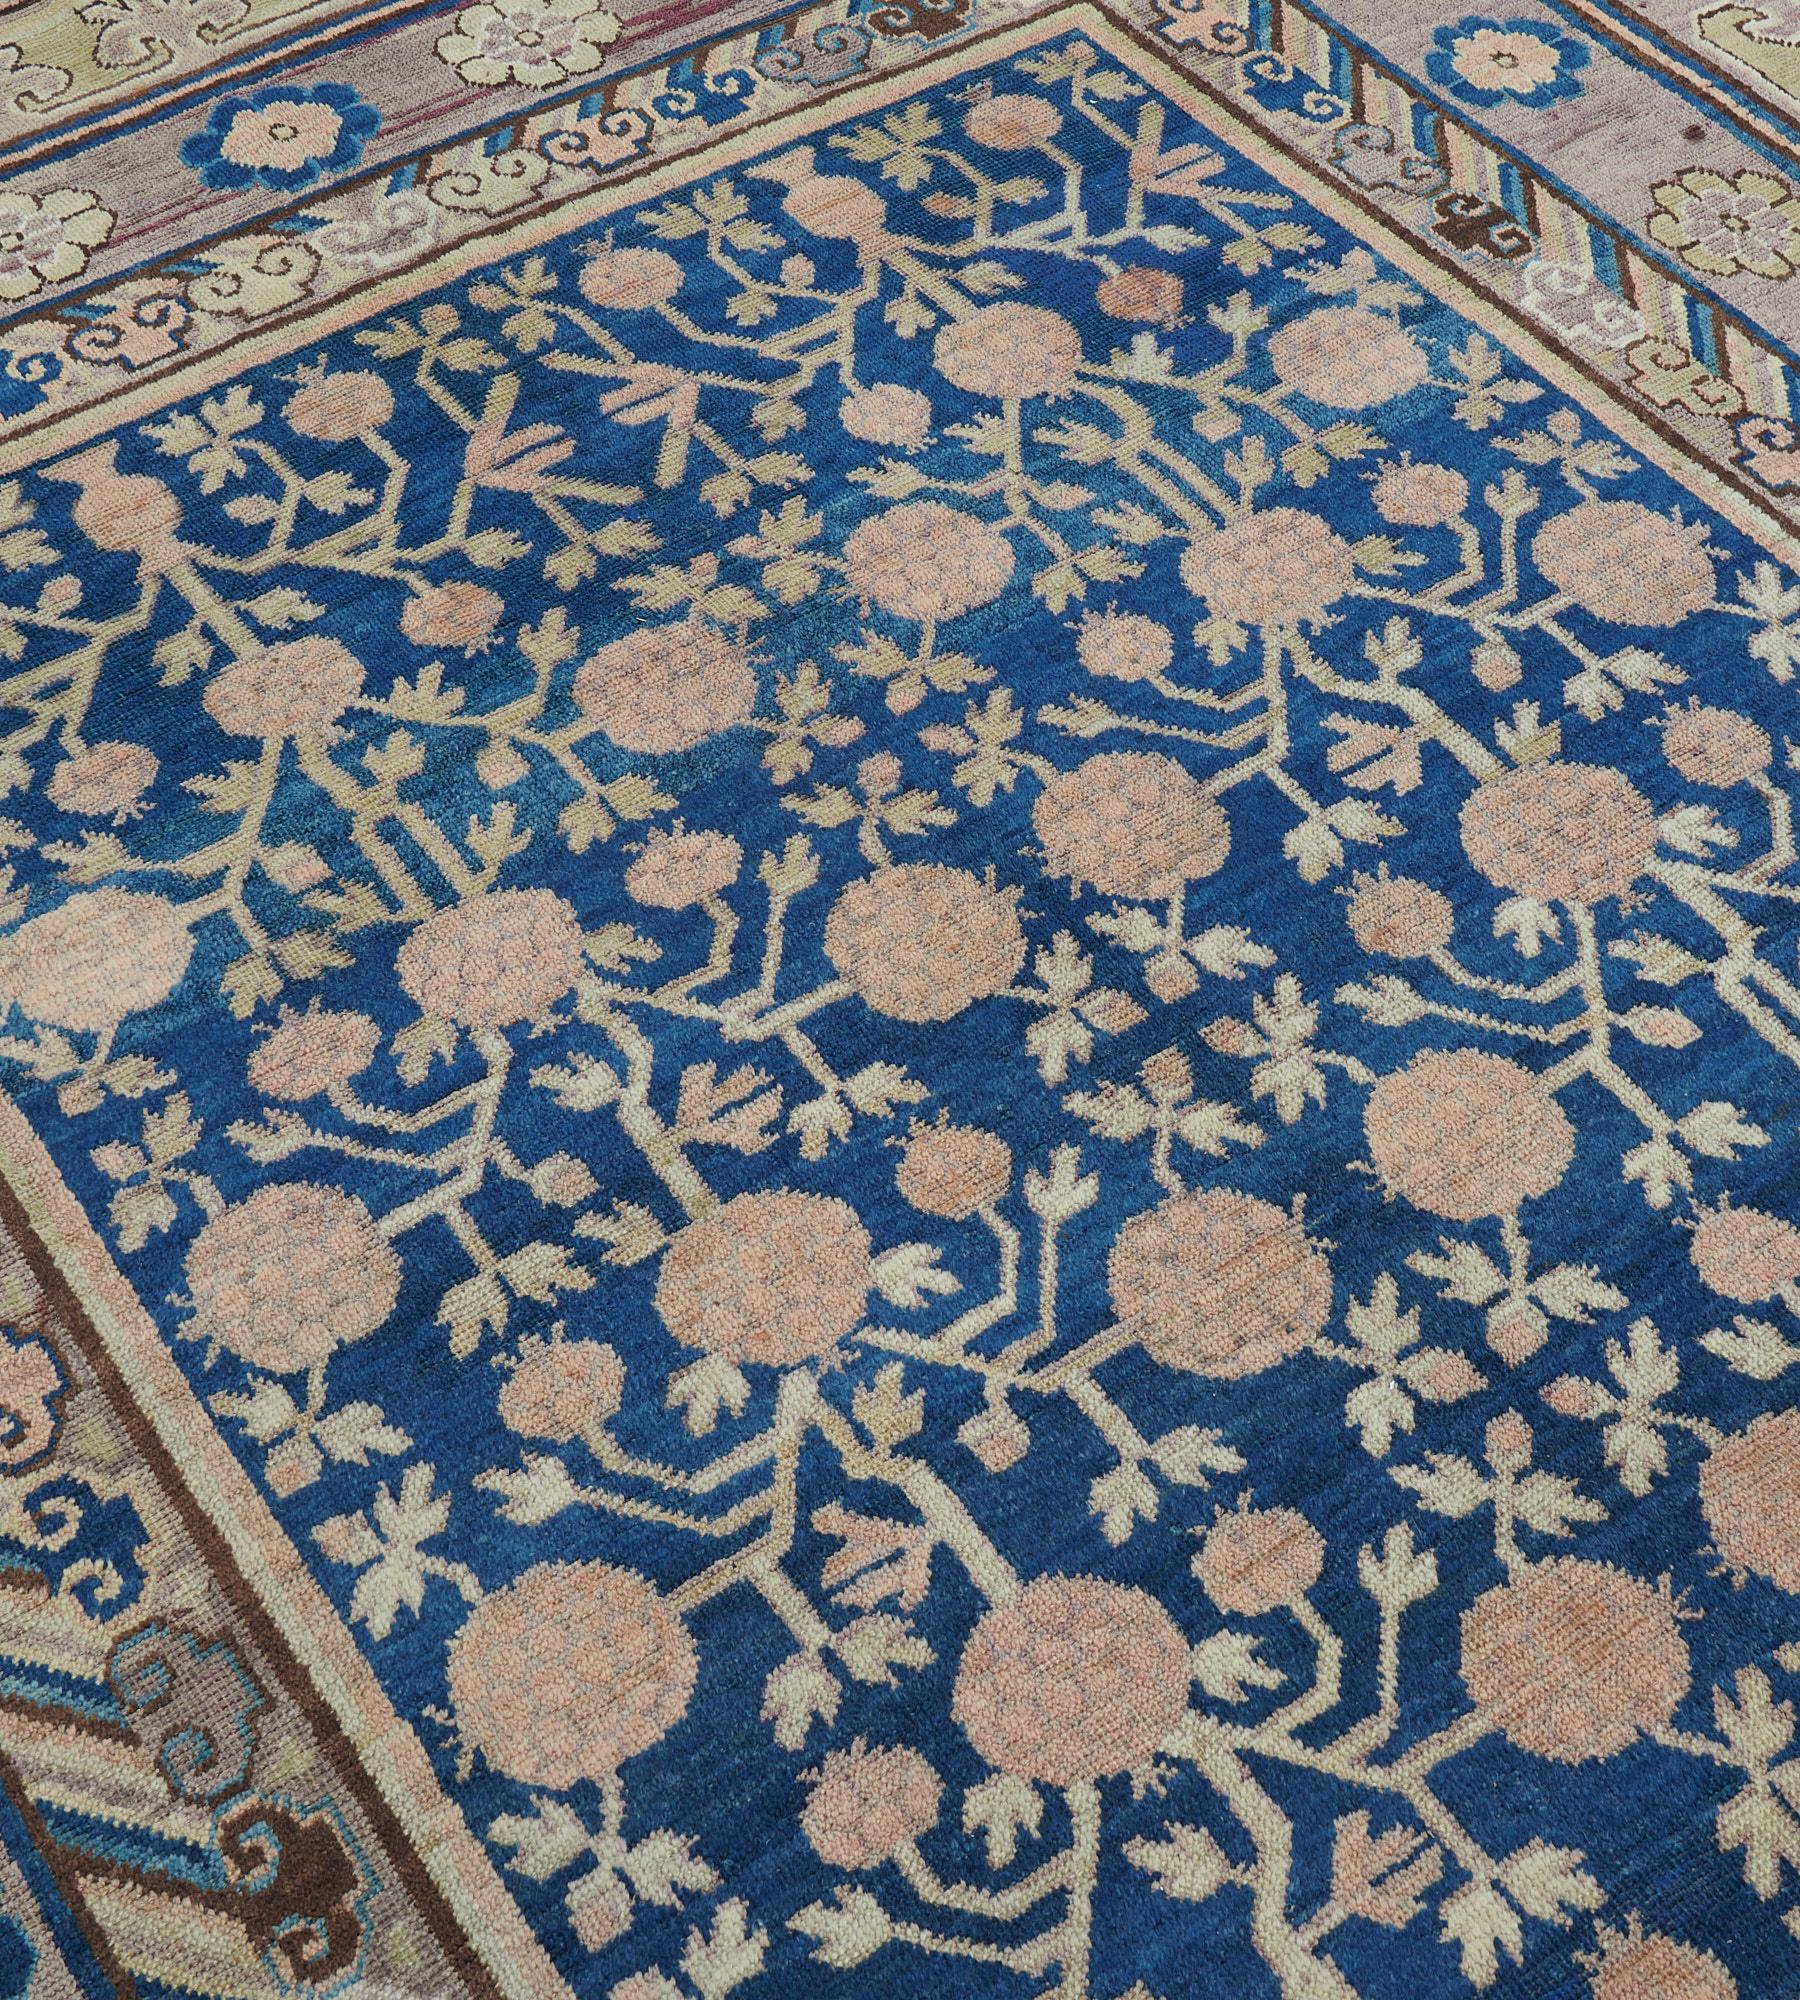 Antique Royal Blue Handwoven Wool Pomegranate Khotan Rug For Sale 1